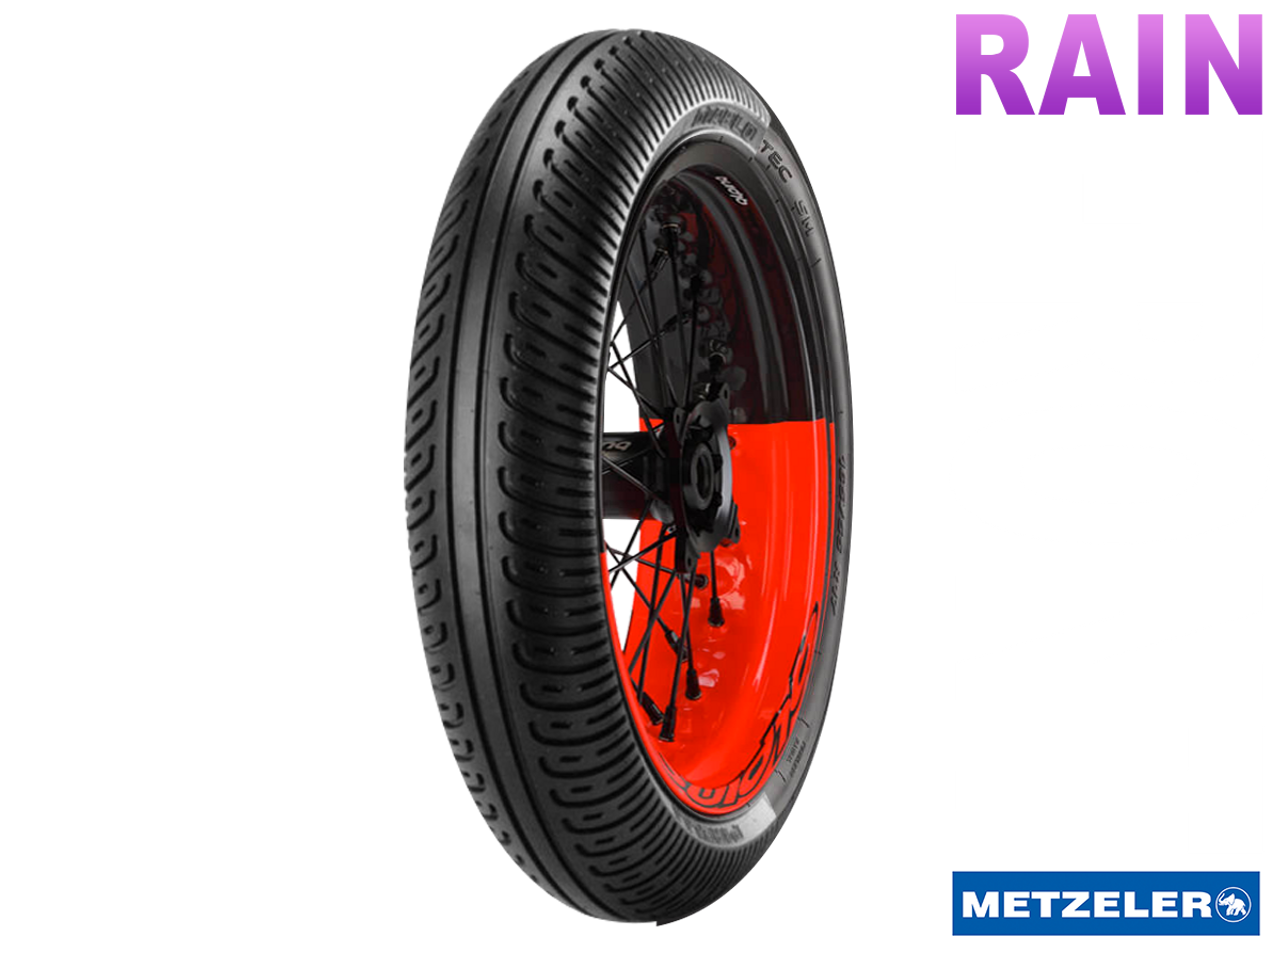 Metzeler Racetec SM Rain Front R .5